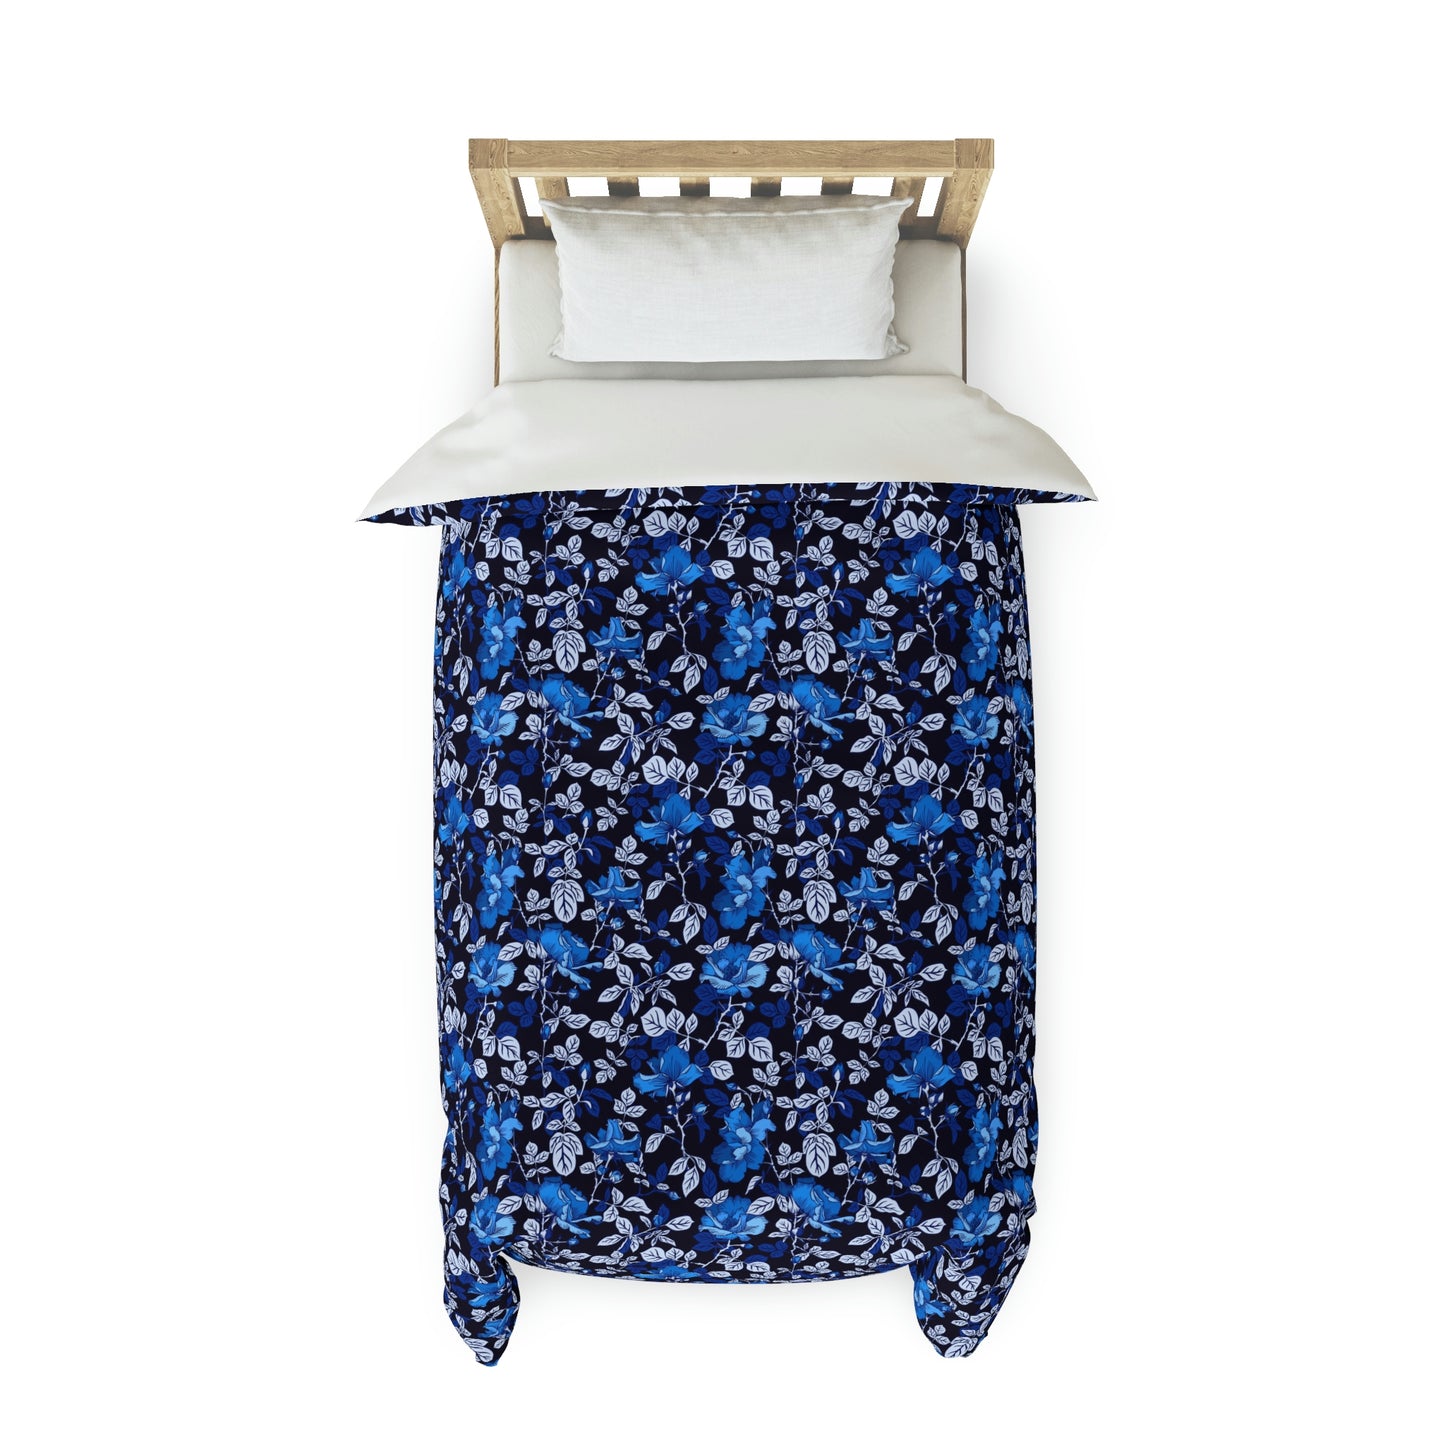 Bold Blue Floral Pattern Duvet Cover lying on a bed, microfiber floral duvet cover bedroom accent